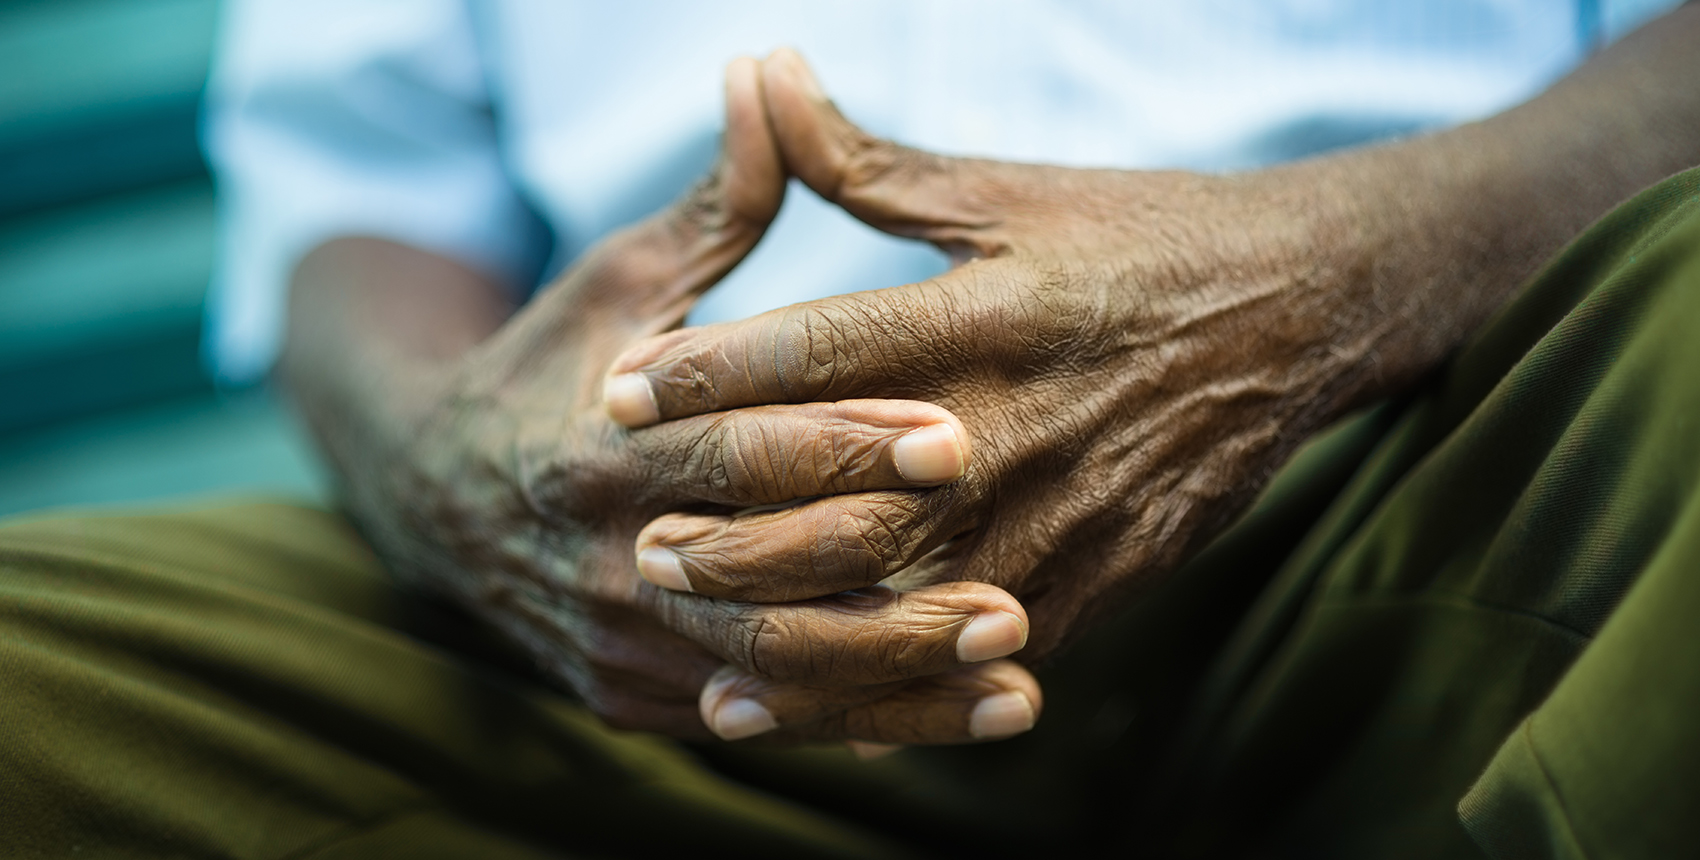 Closeup of hands of elderly Black man sitting on bench